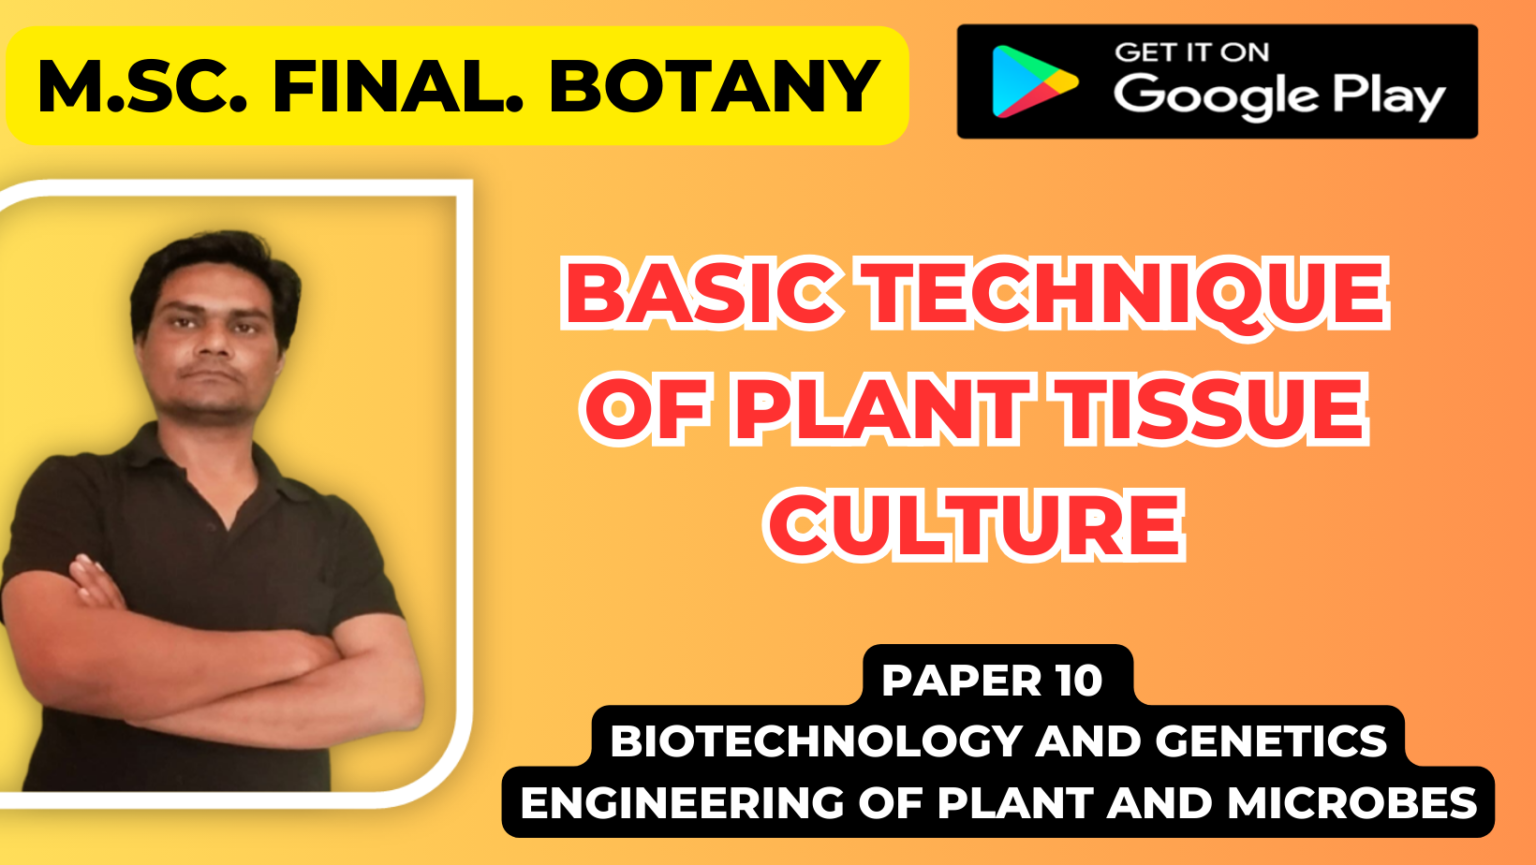 Basic technique of plant tissue culture